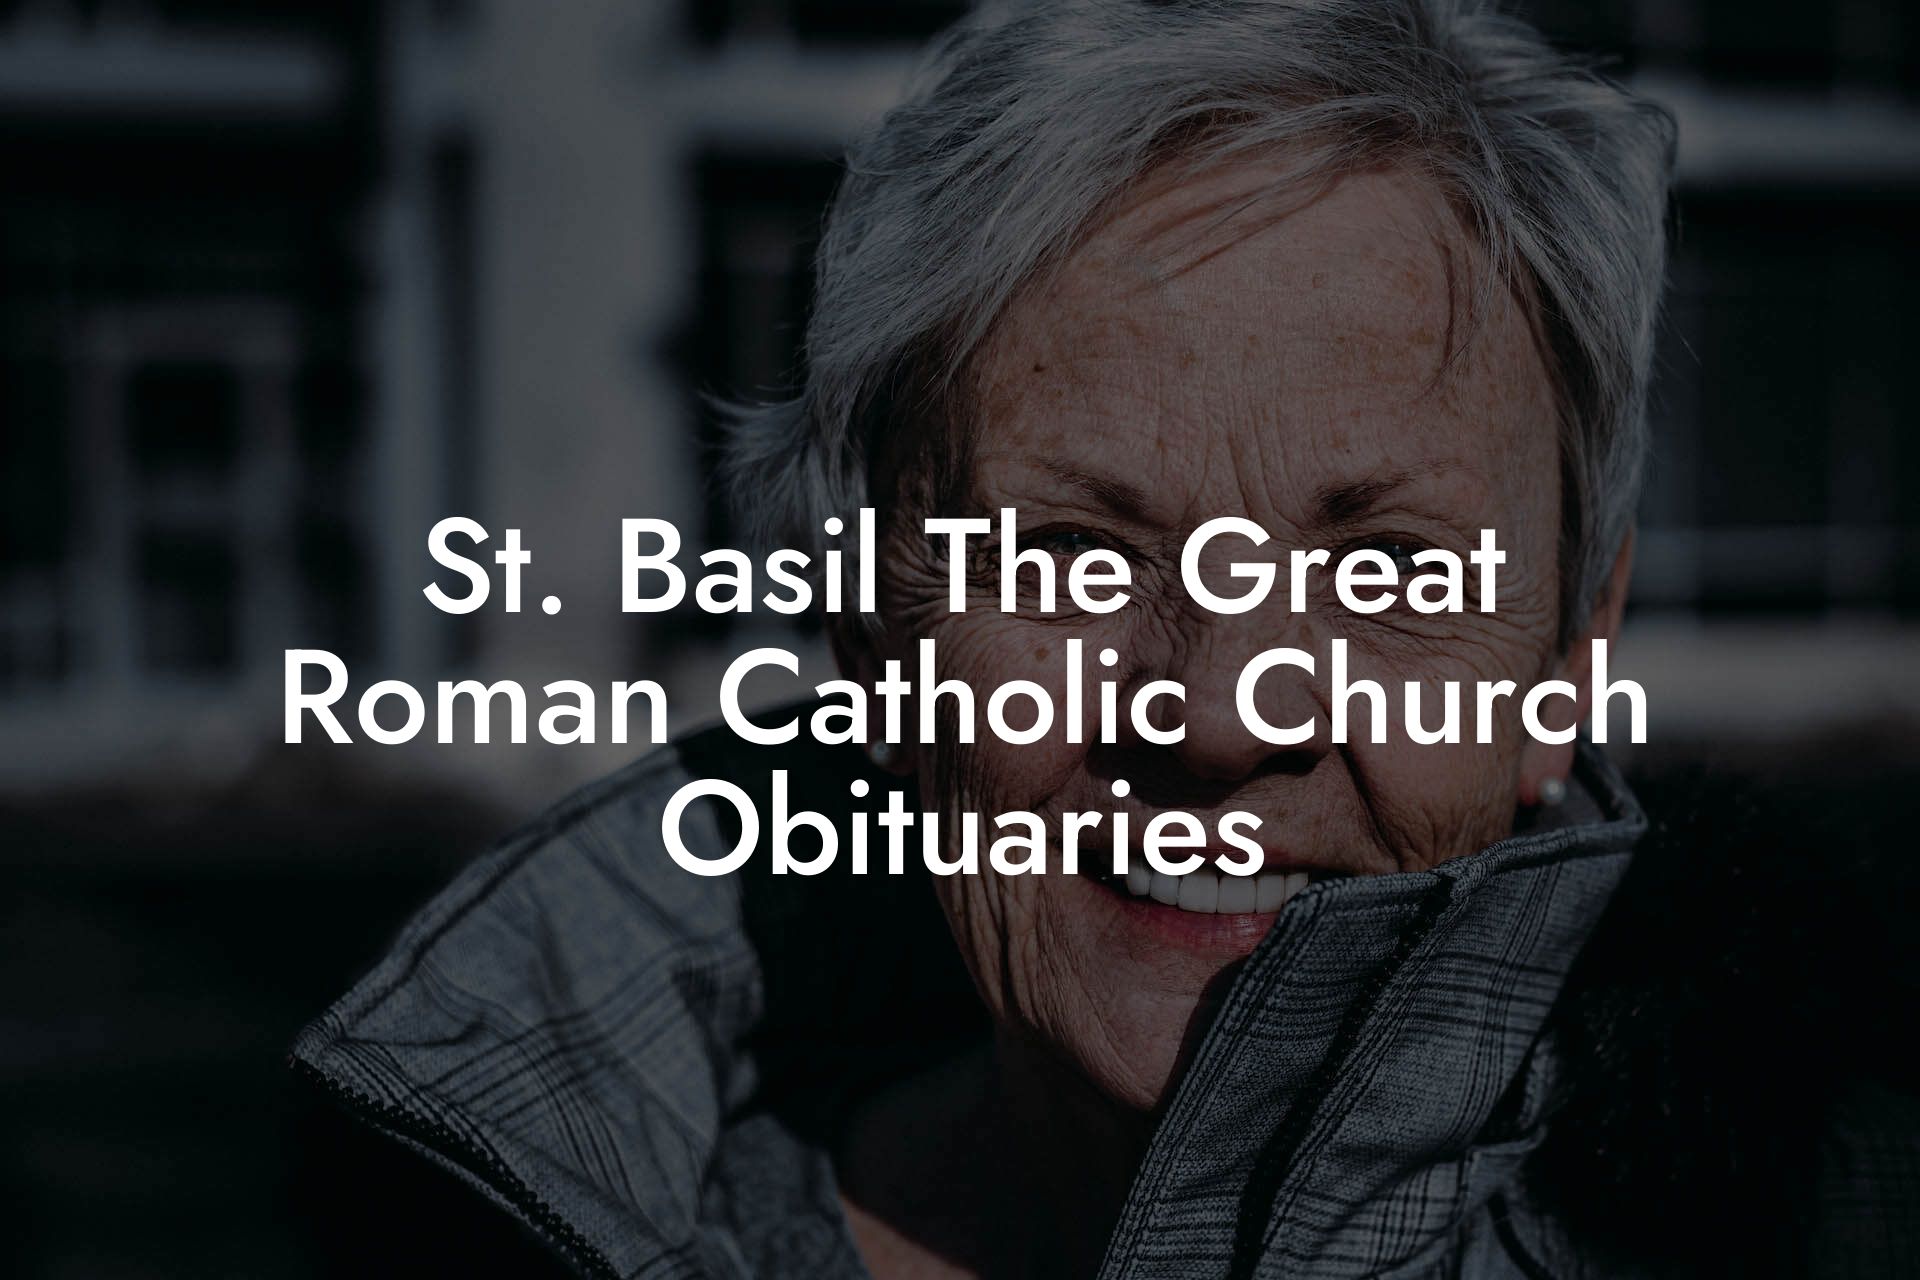 St. Basil The Great Roman Catholic Church Obituaries